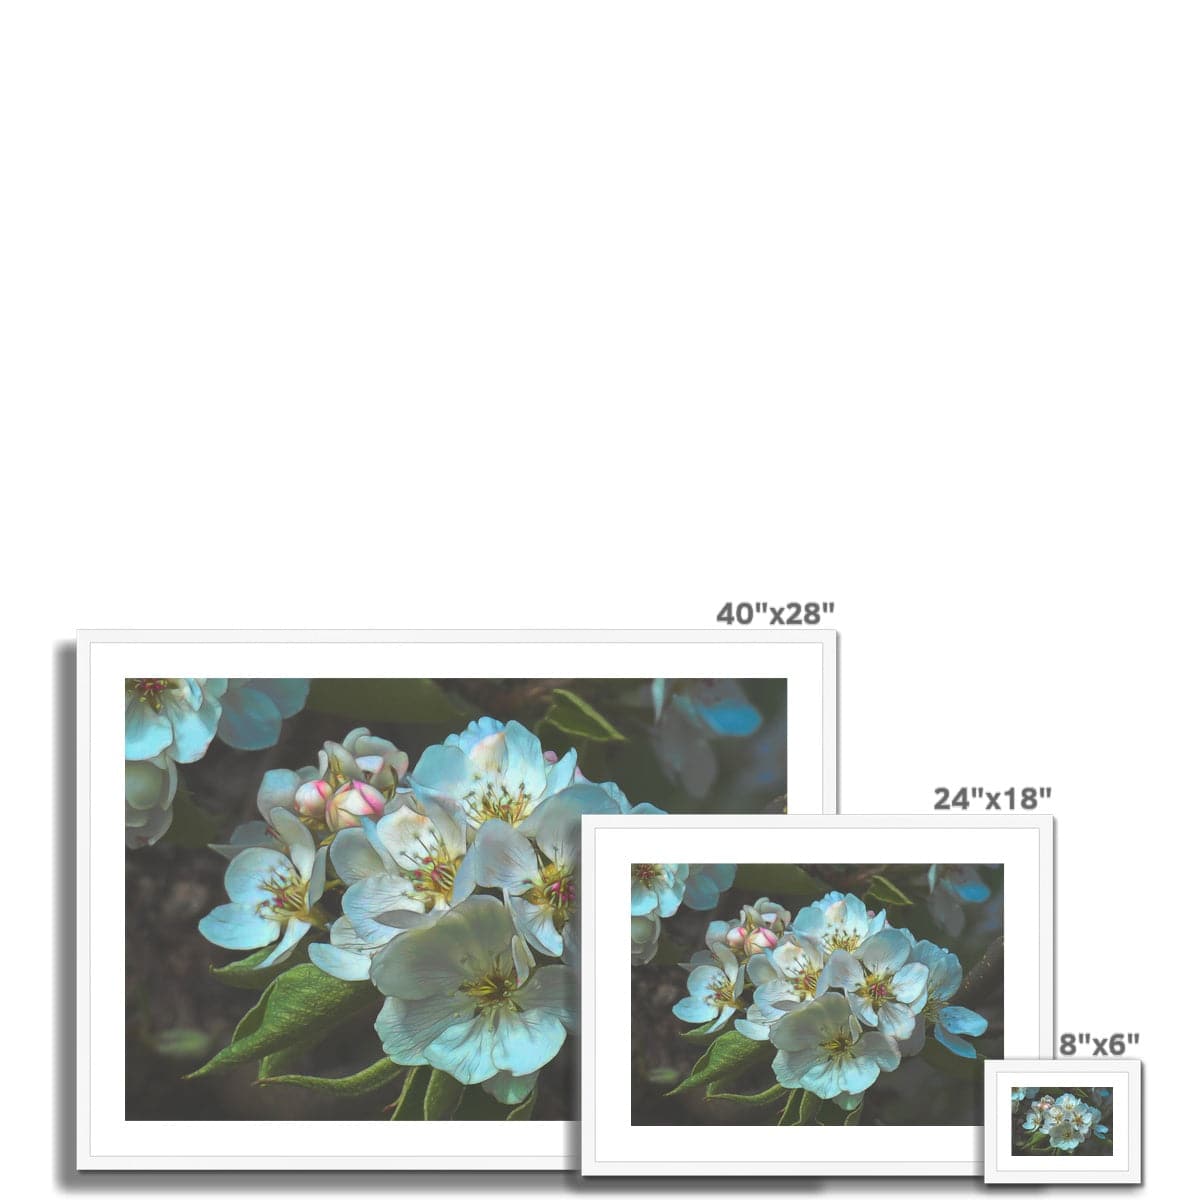 Apple blossom, Framed & Mounted Print, by Sensus Studio